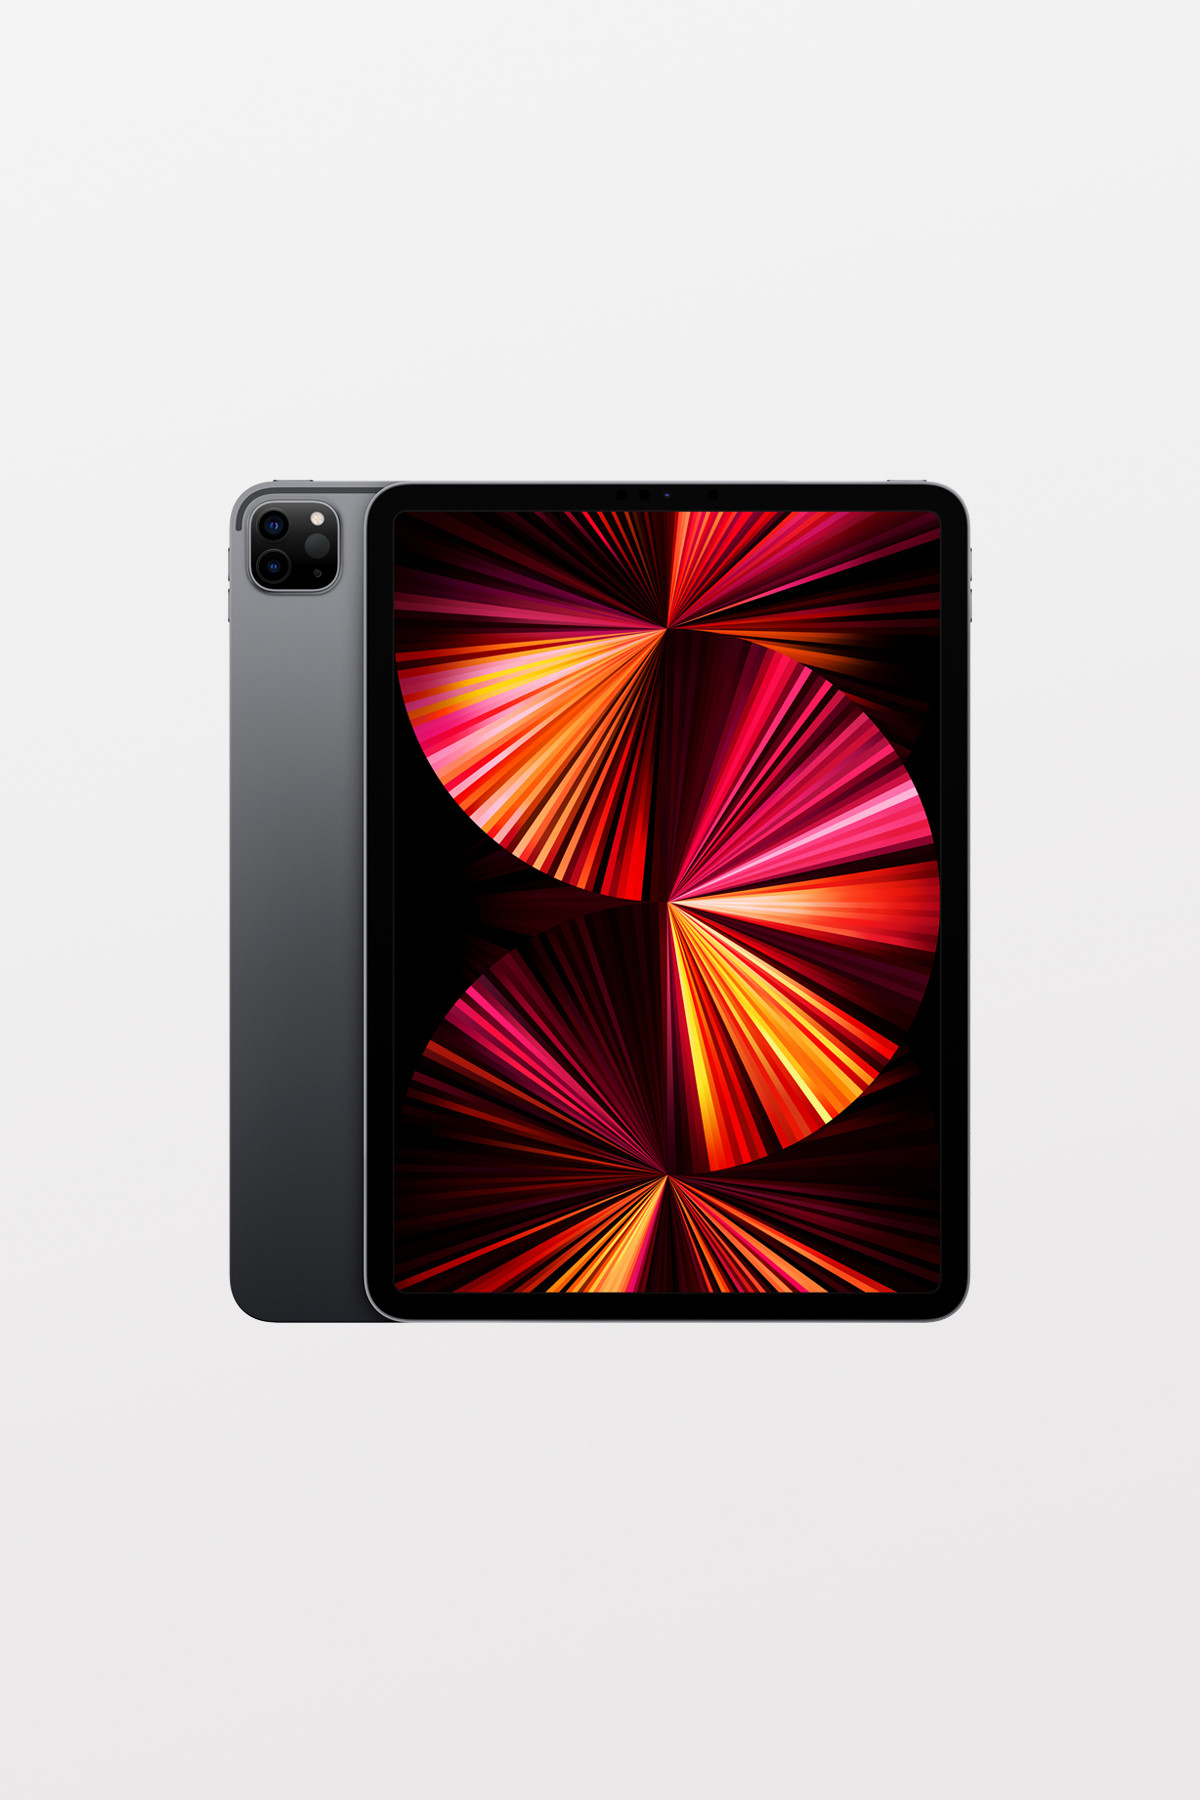 iPad Pro 11IN (3GEN) WI-FI 256GB Space Grey